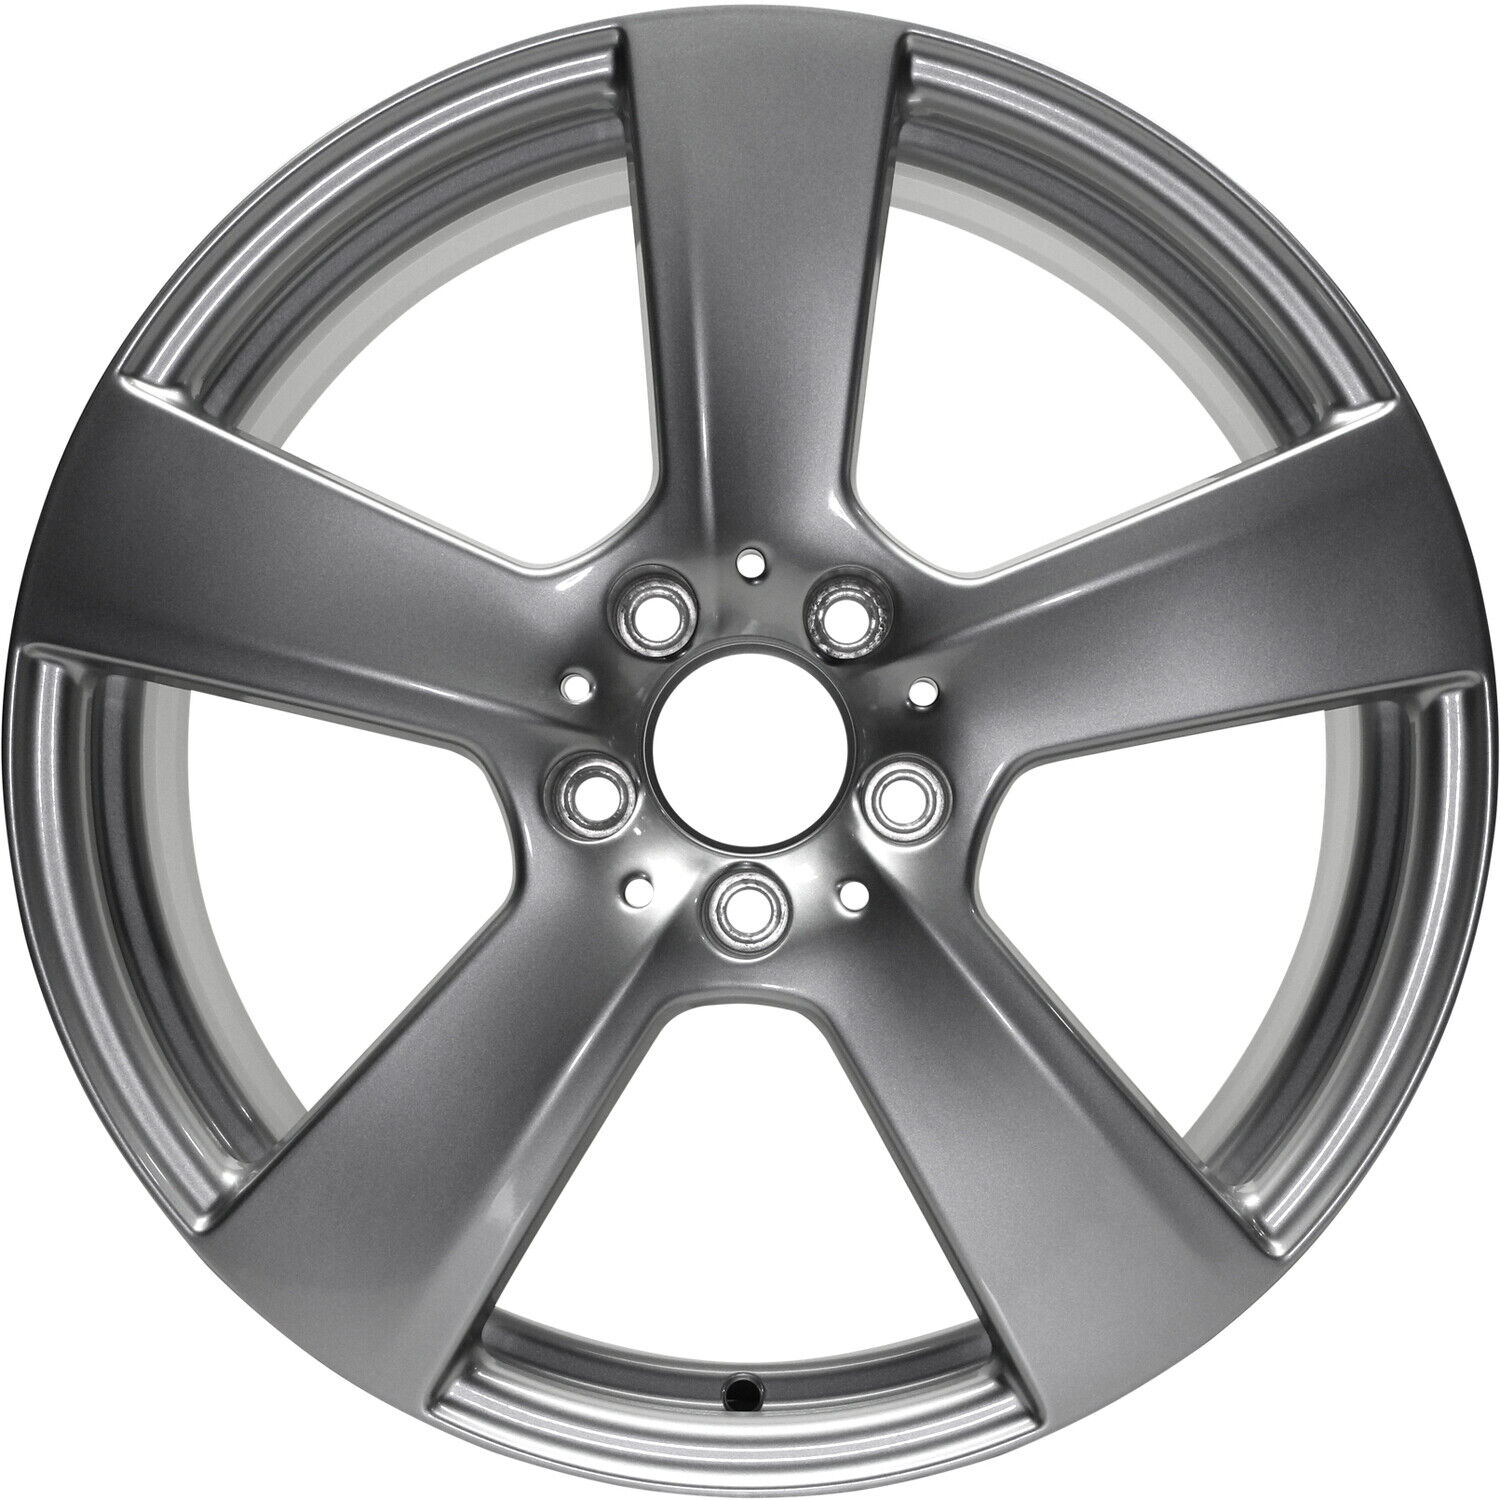 18x8.5 5 Spoke Refurbished Mercedes Front Silver Max Super sale 40% OFF Aluminum Wheel